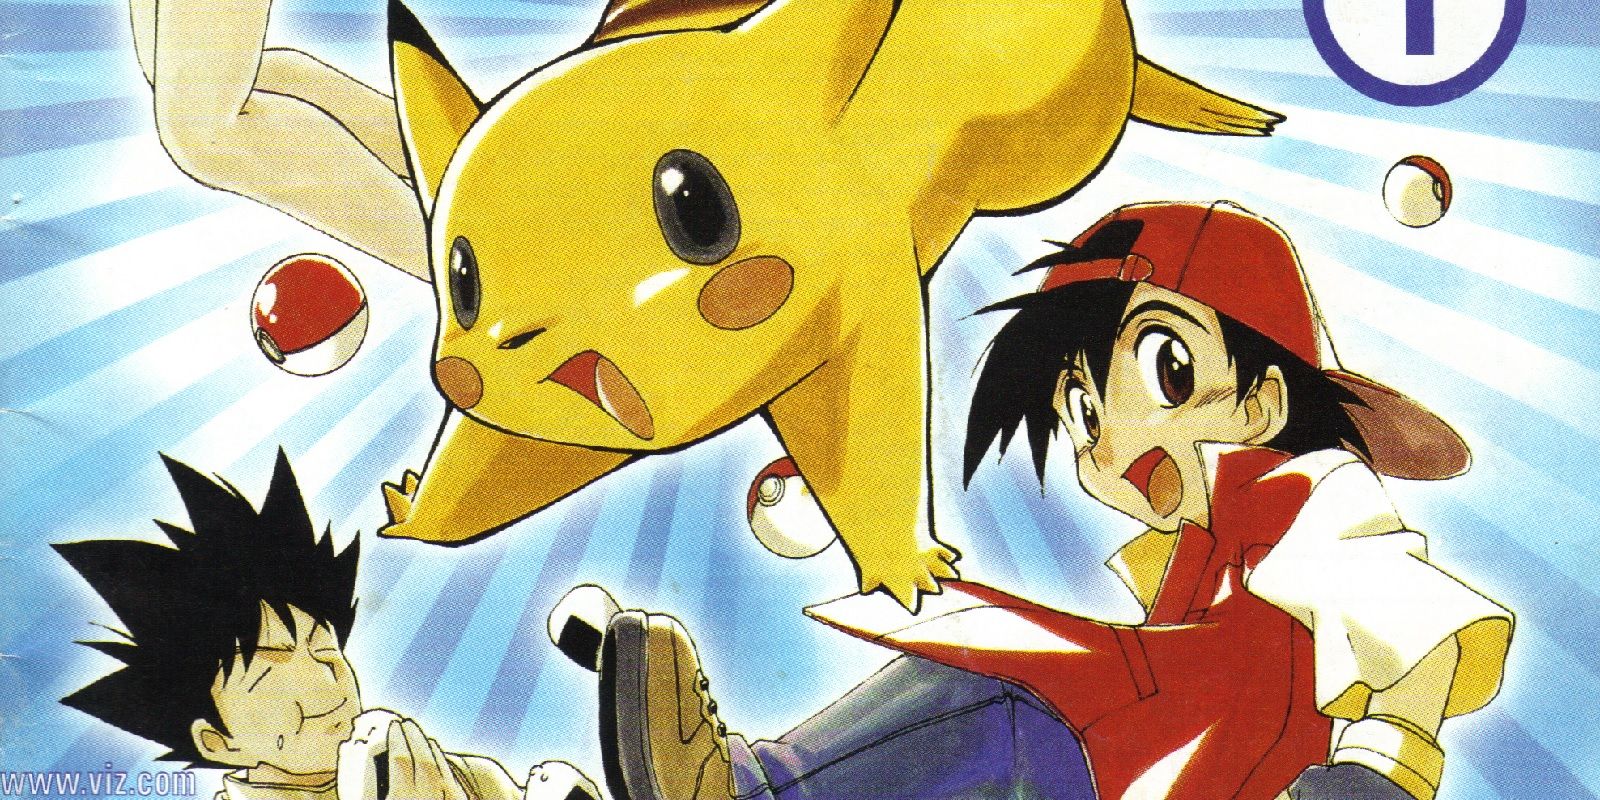 Pokemon Electric Tale of Pikachu Cover art